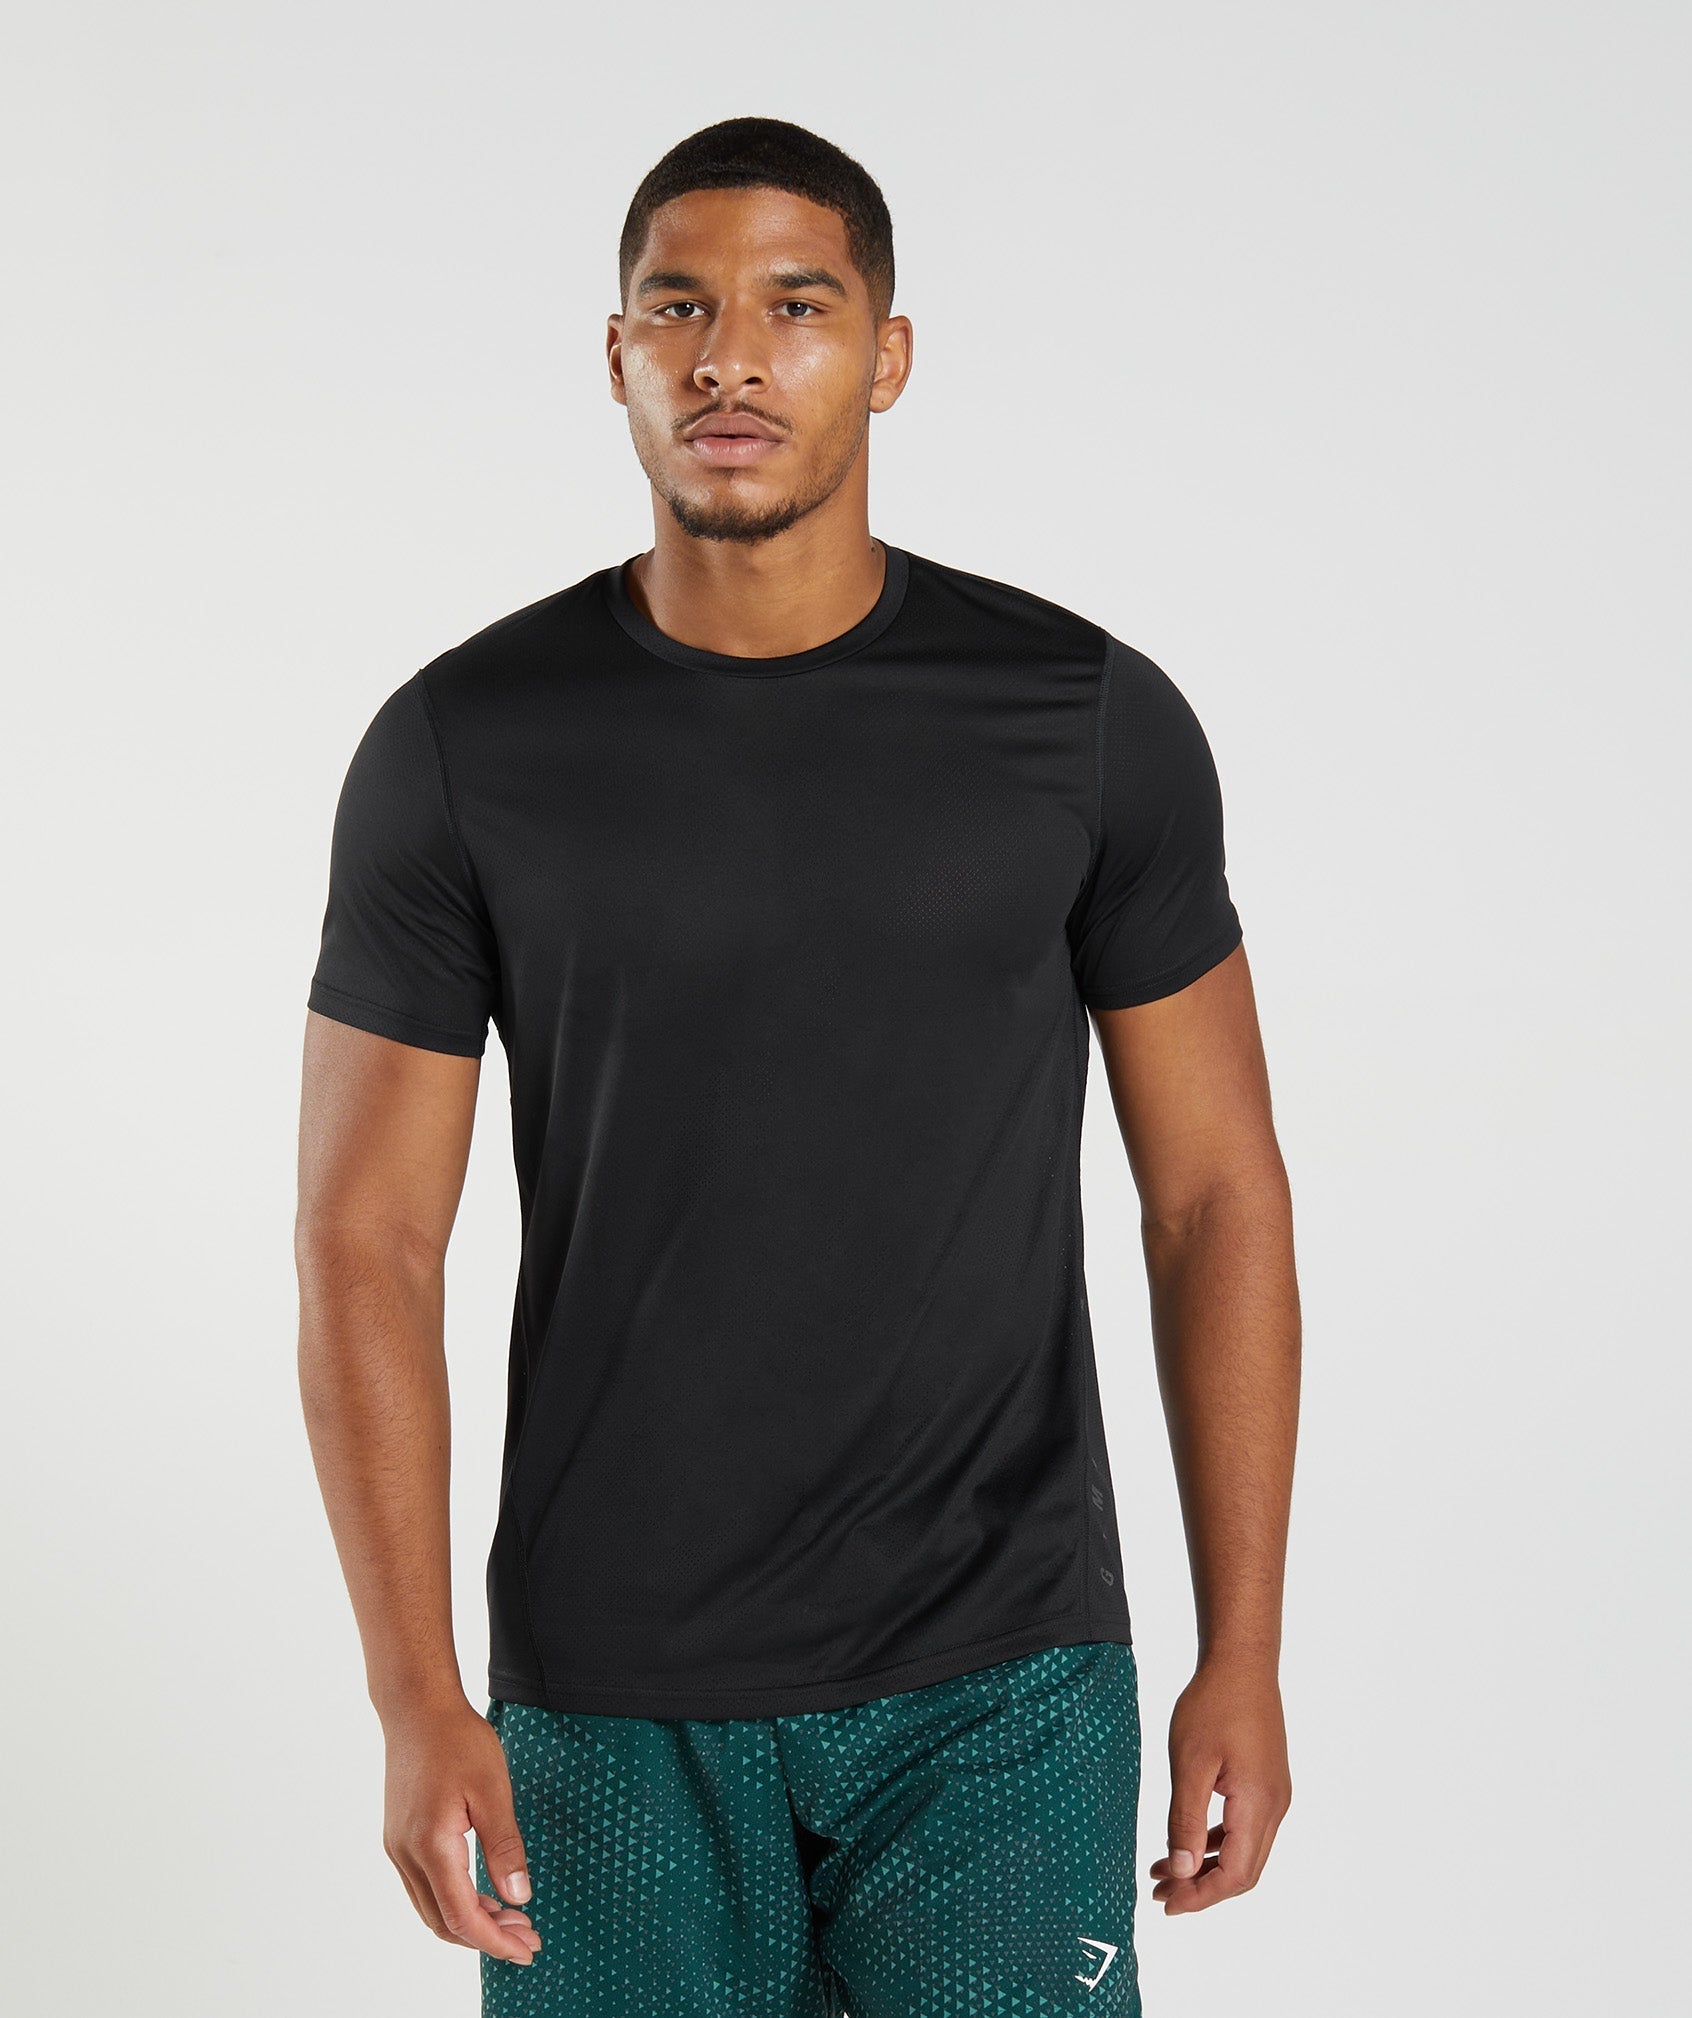 Gymshark Sport T-Shirt - Fog Green/Black Marl